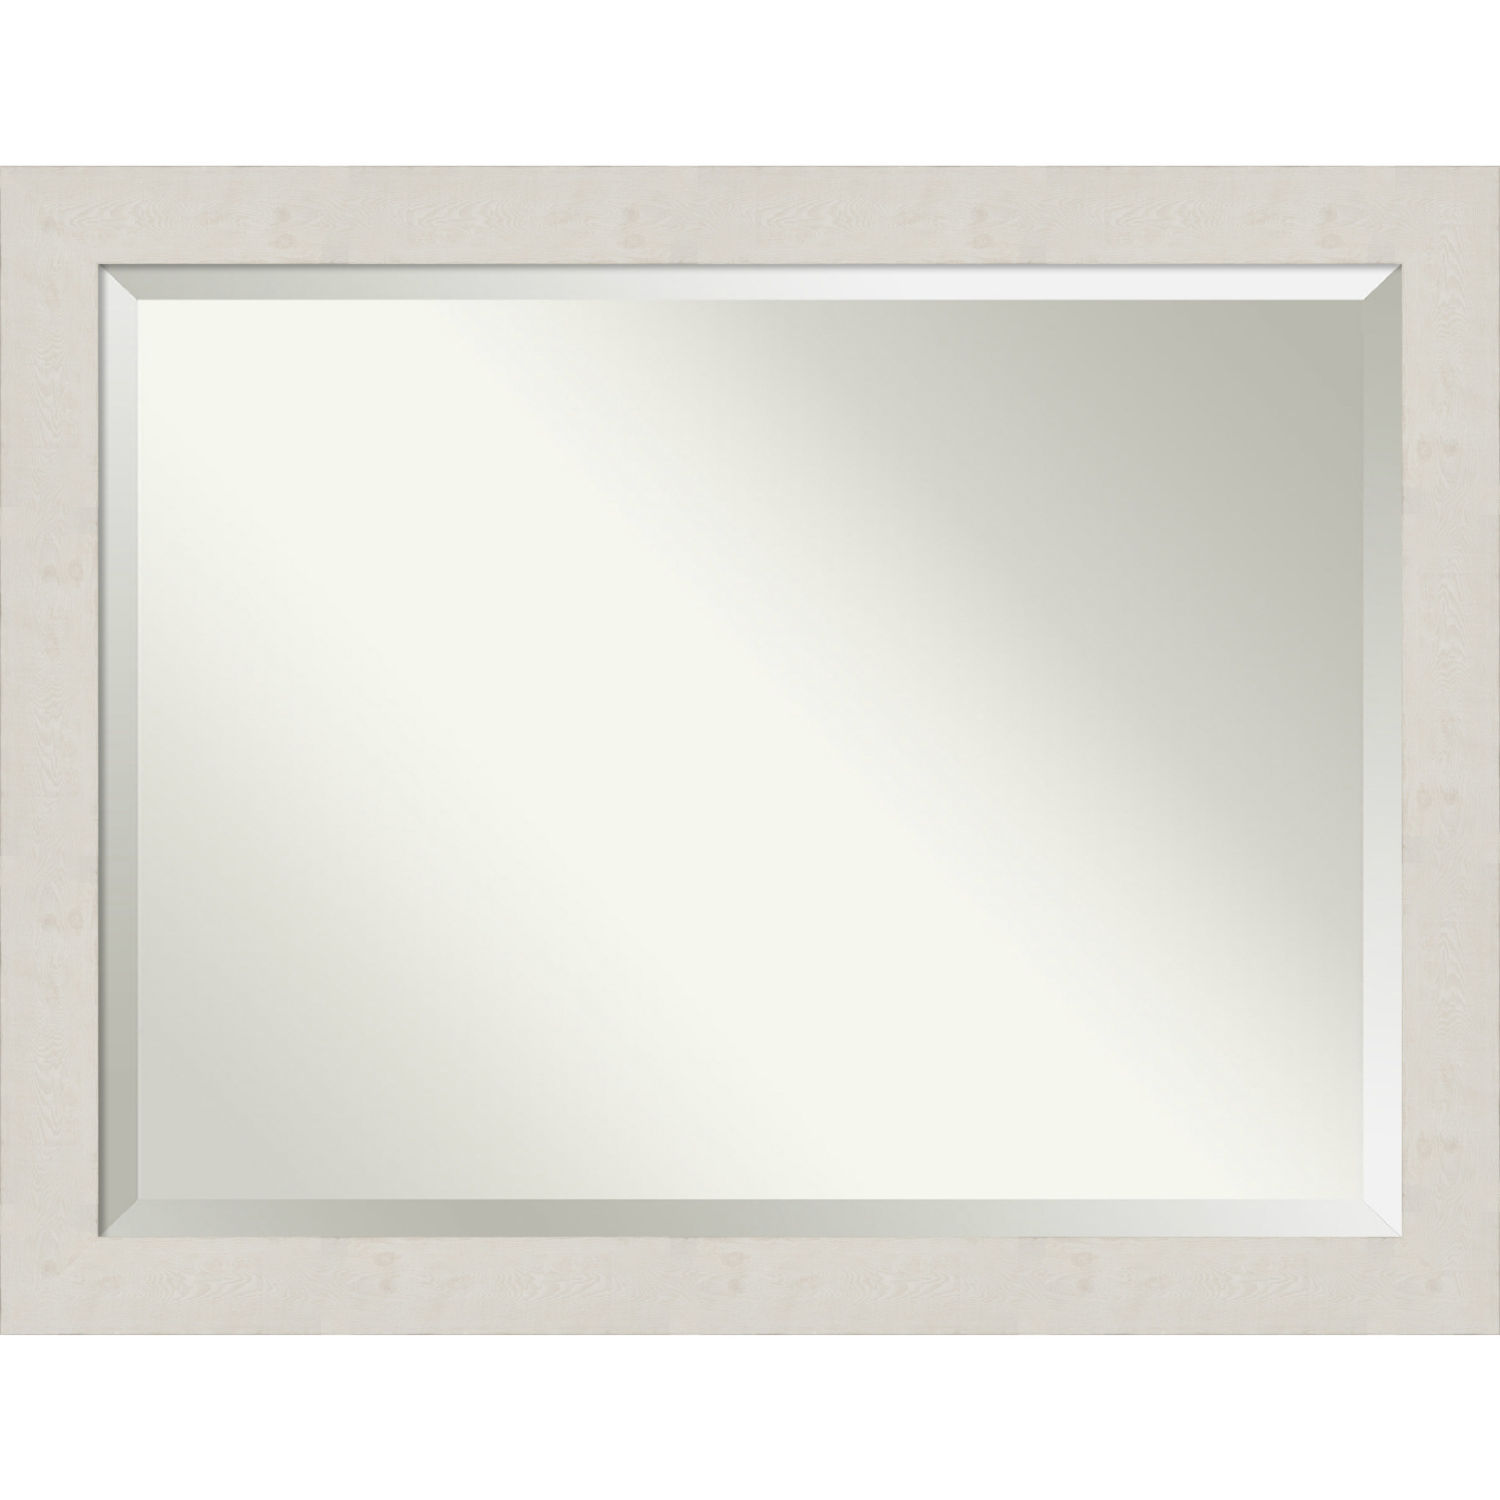 Rustic Plank White 45W X 35H-Inch Bathroom Vanity Wall Mirror